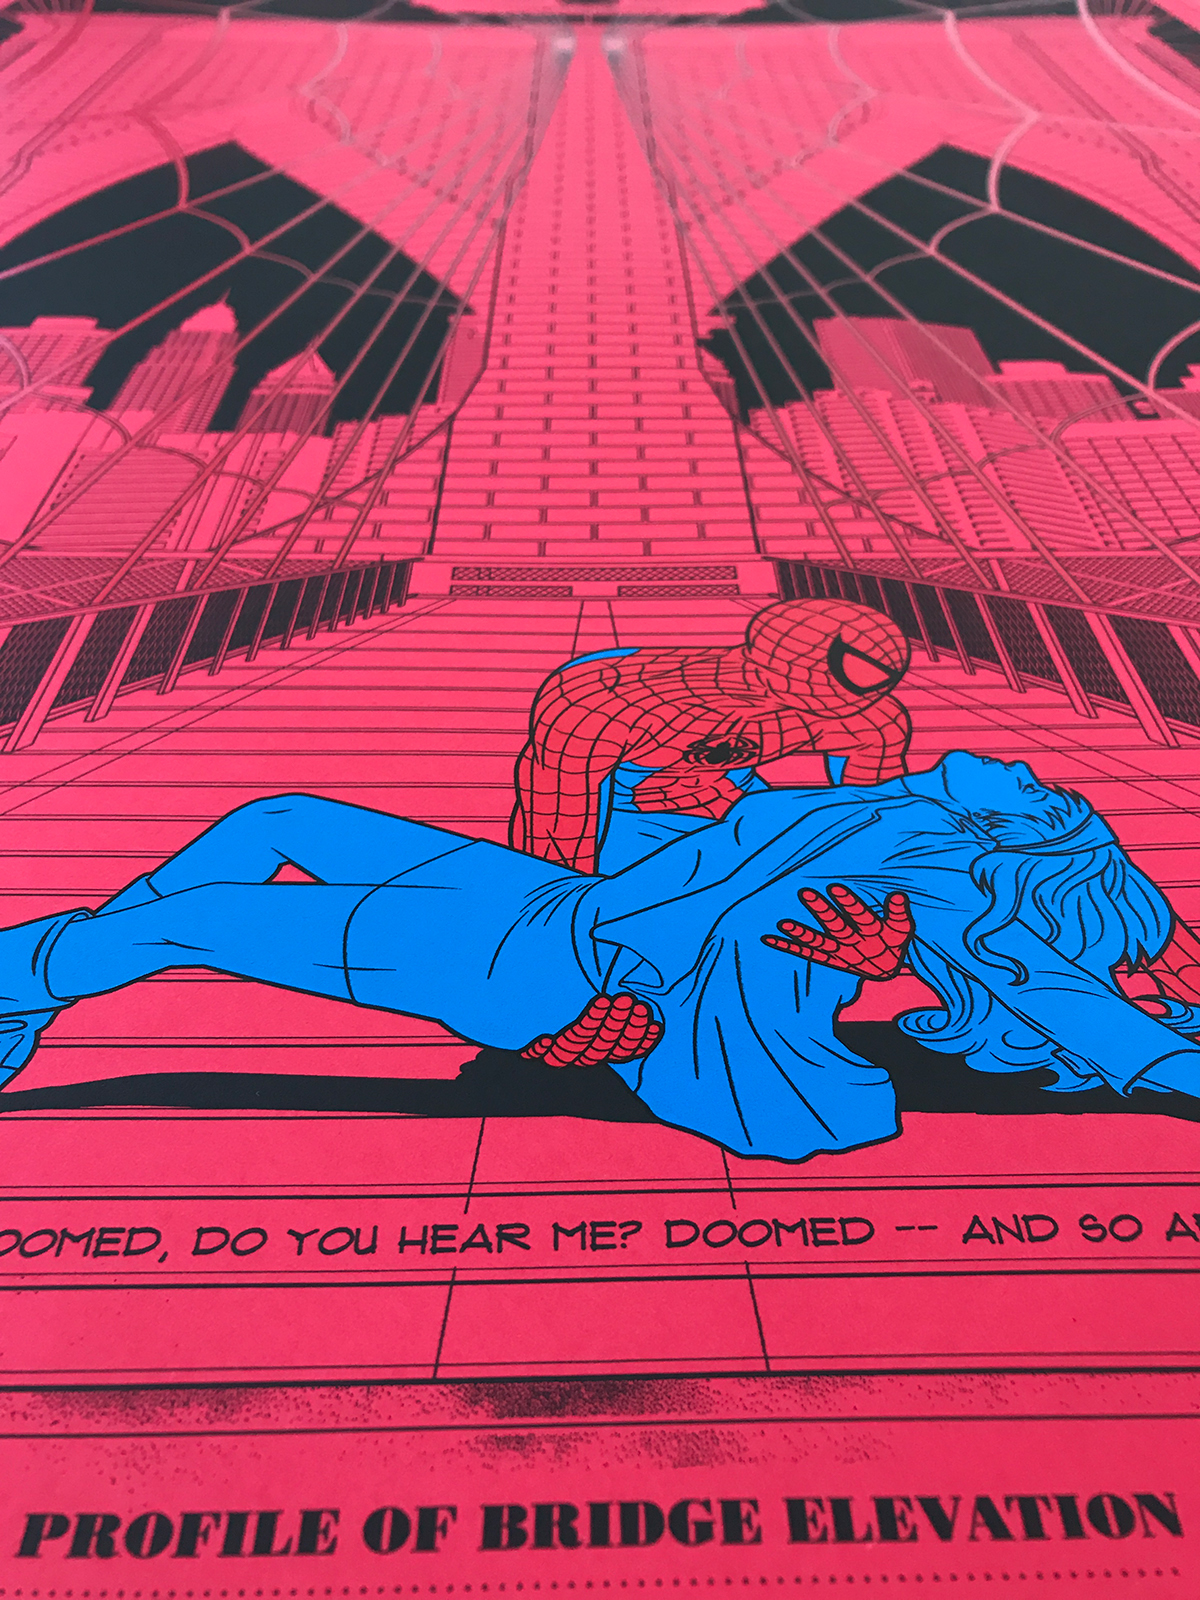 spider-man marvel comics gwen stacy peter parker Stan Lee screen print Charts Blueprint poster